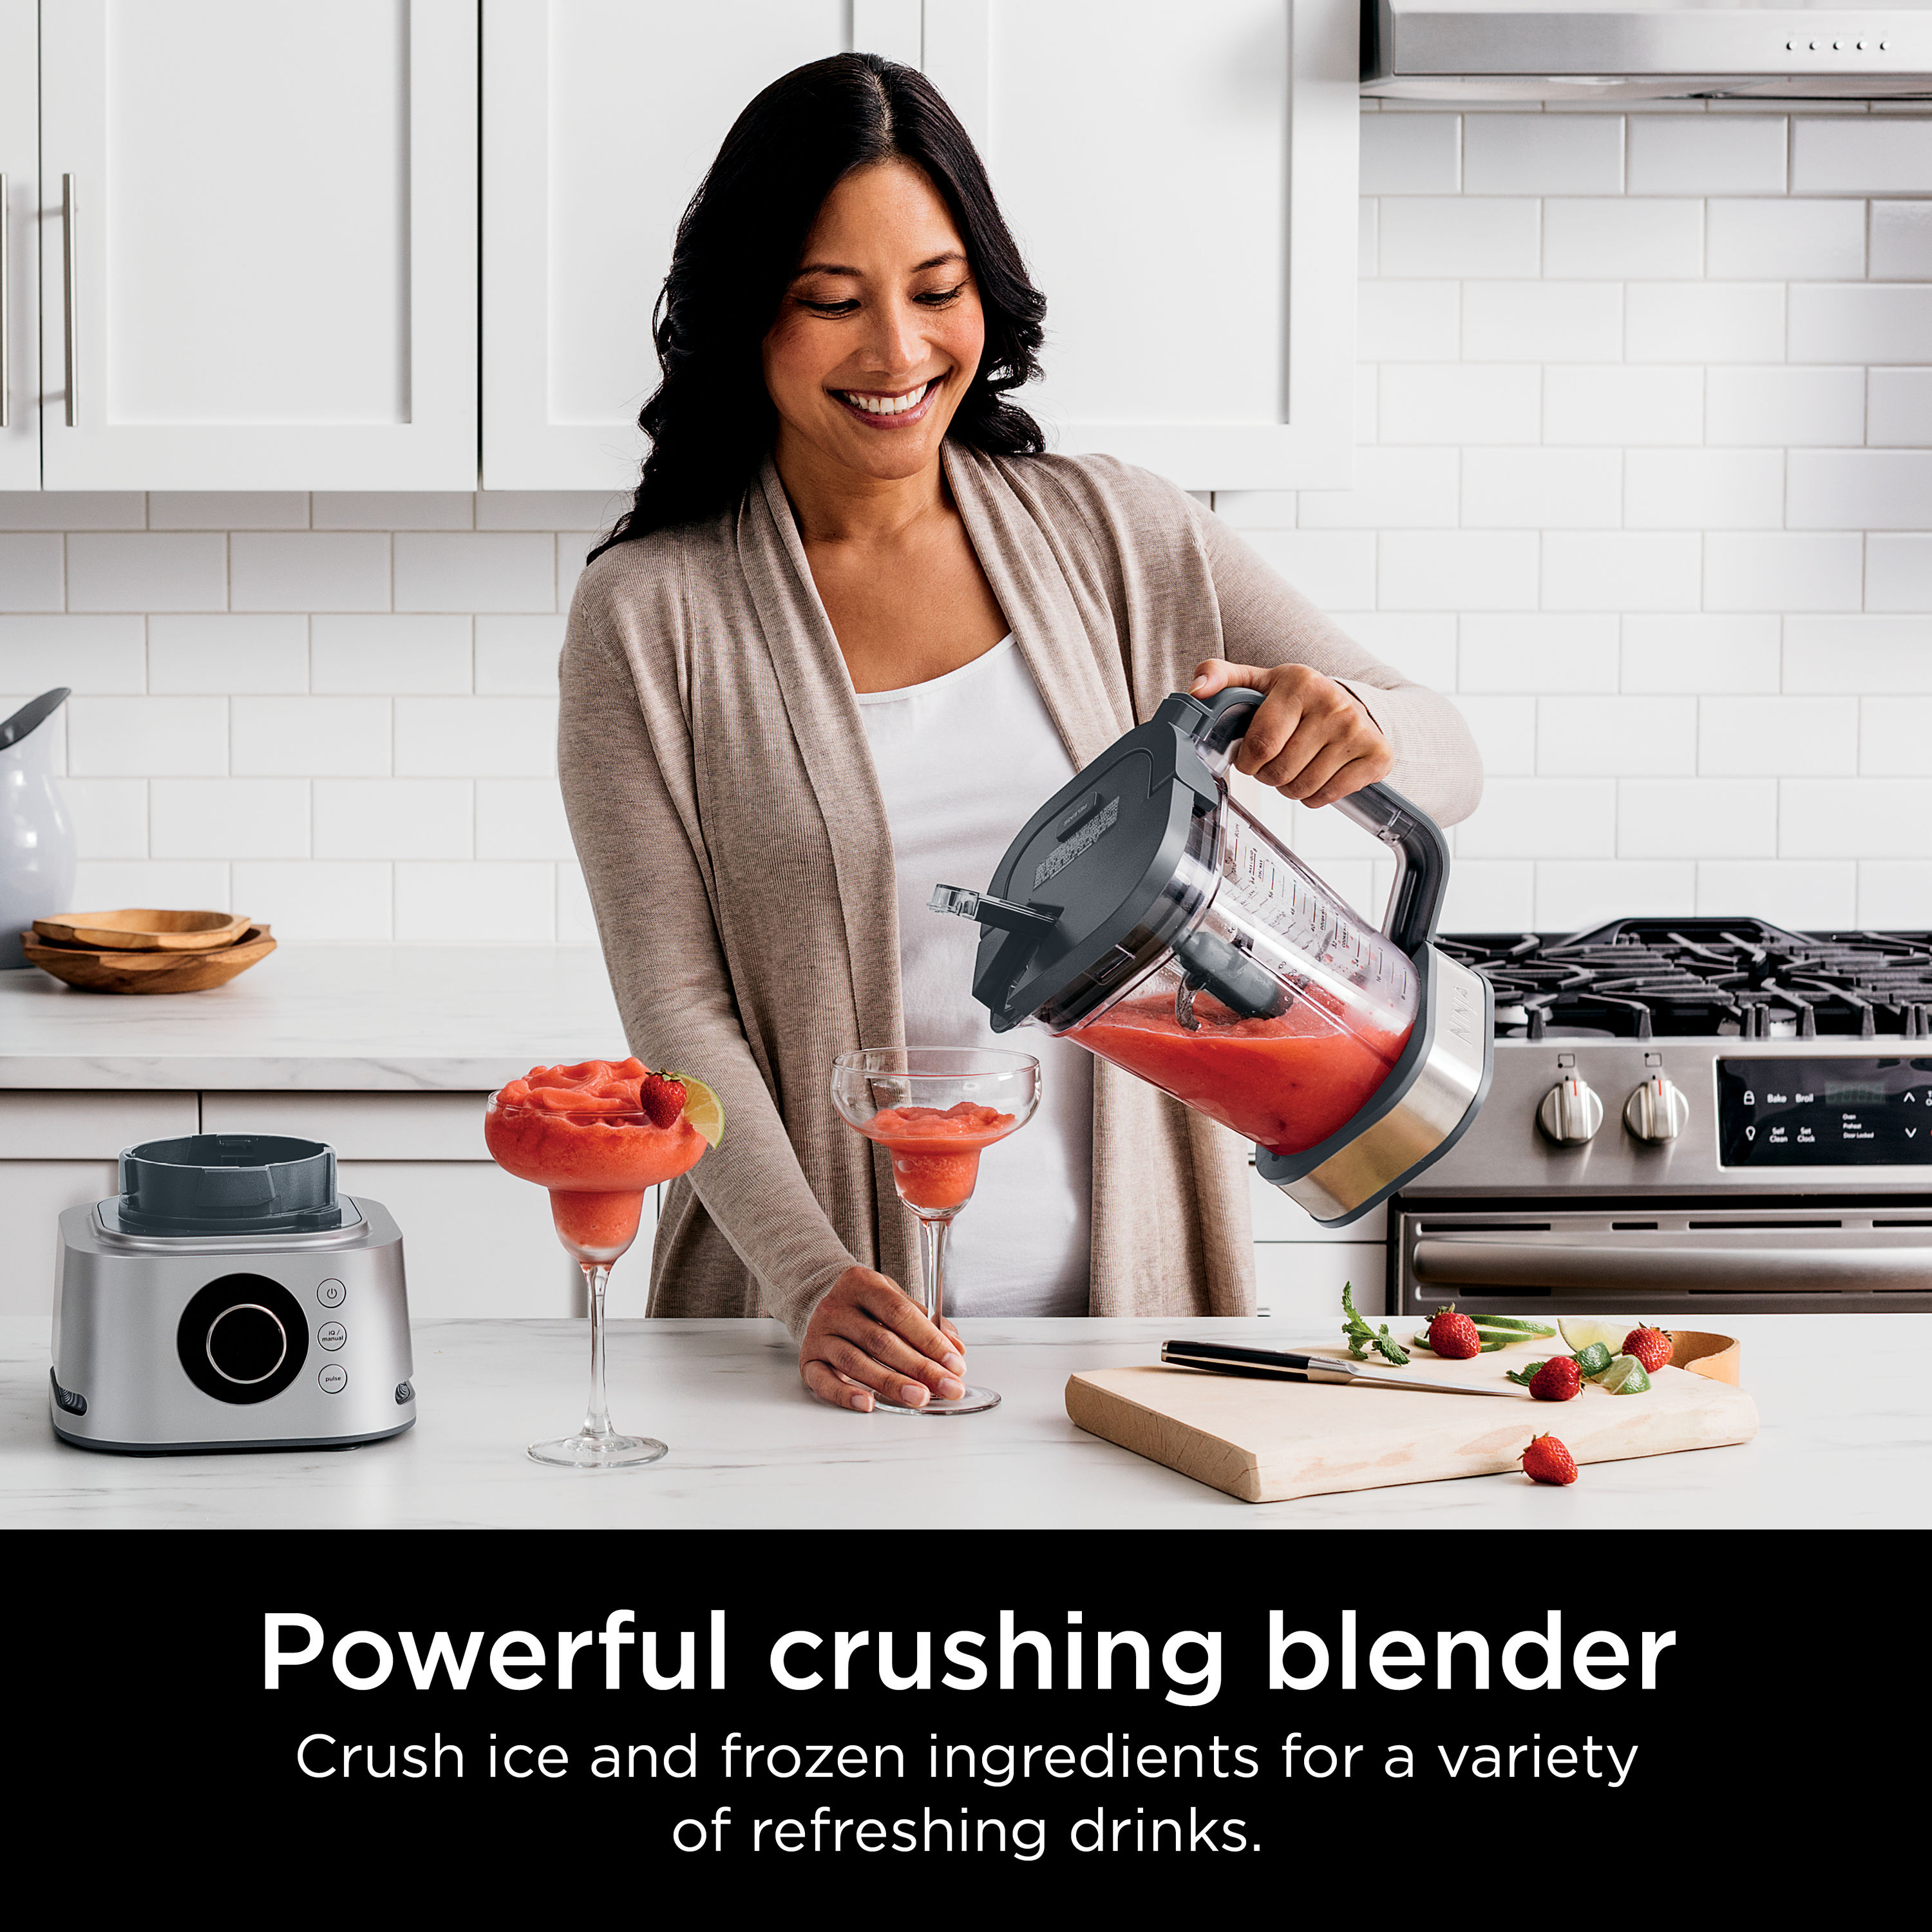 Ninja® Professional Plus Blender, 1 ct - Fry's Food Stores